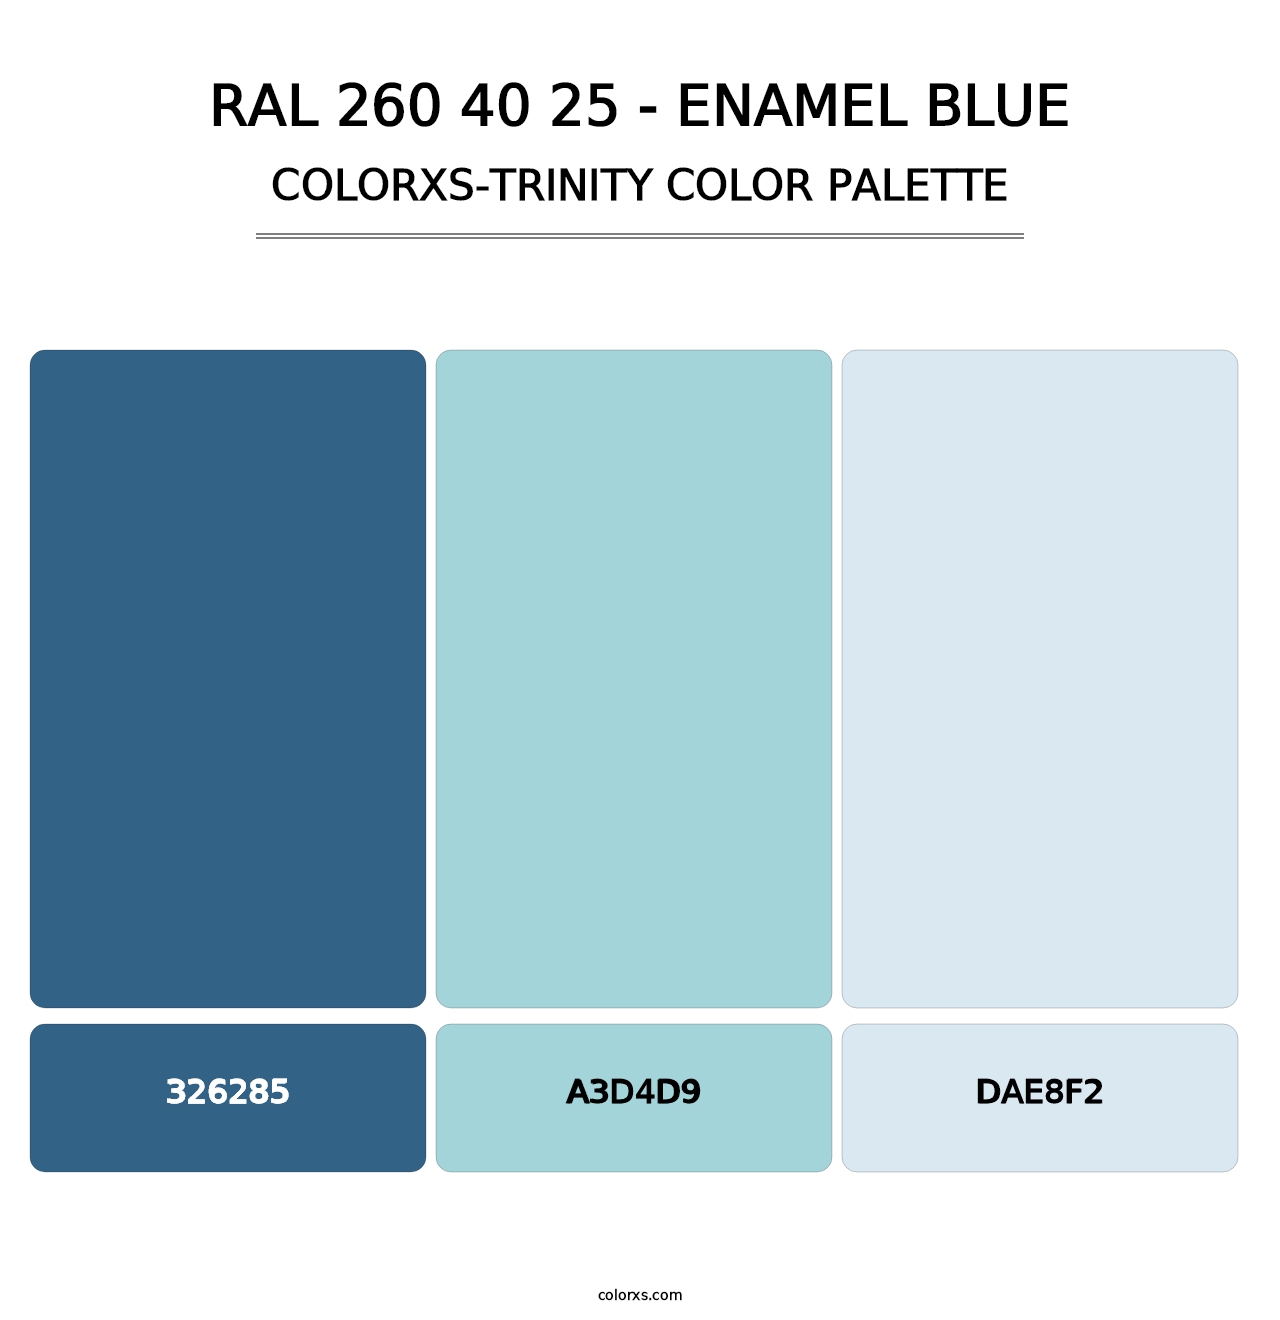 RAL 260 40 25 - Enamel Blue - Colorxs Trinity Palette